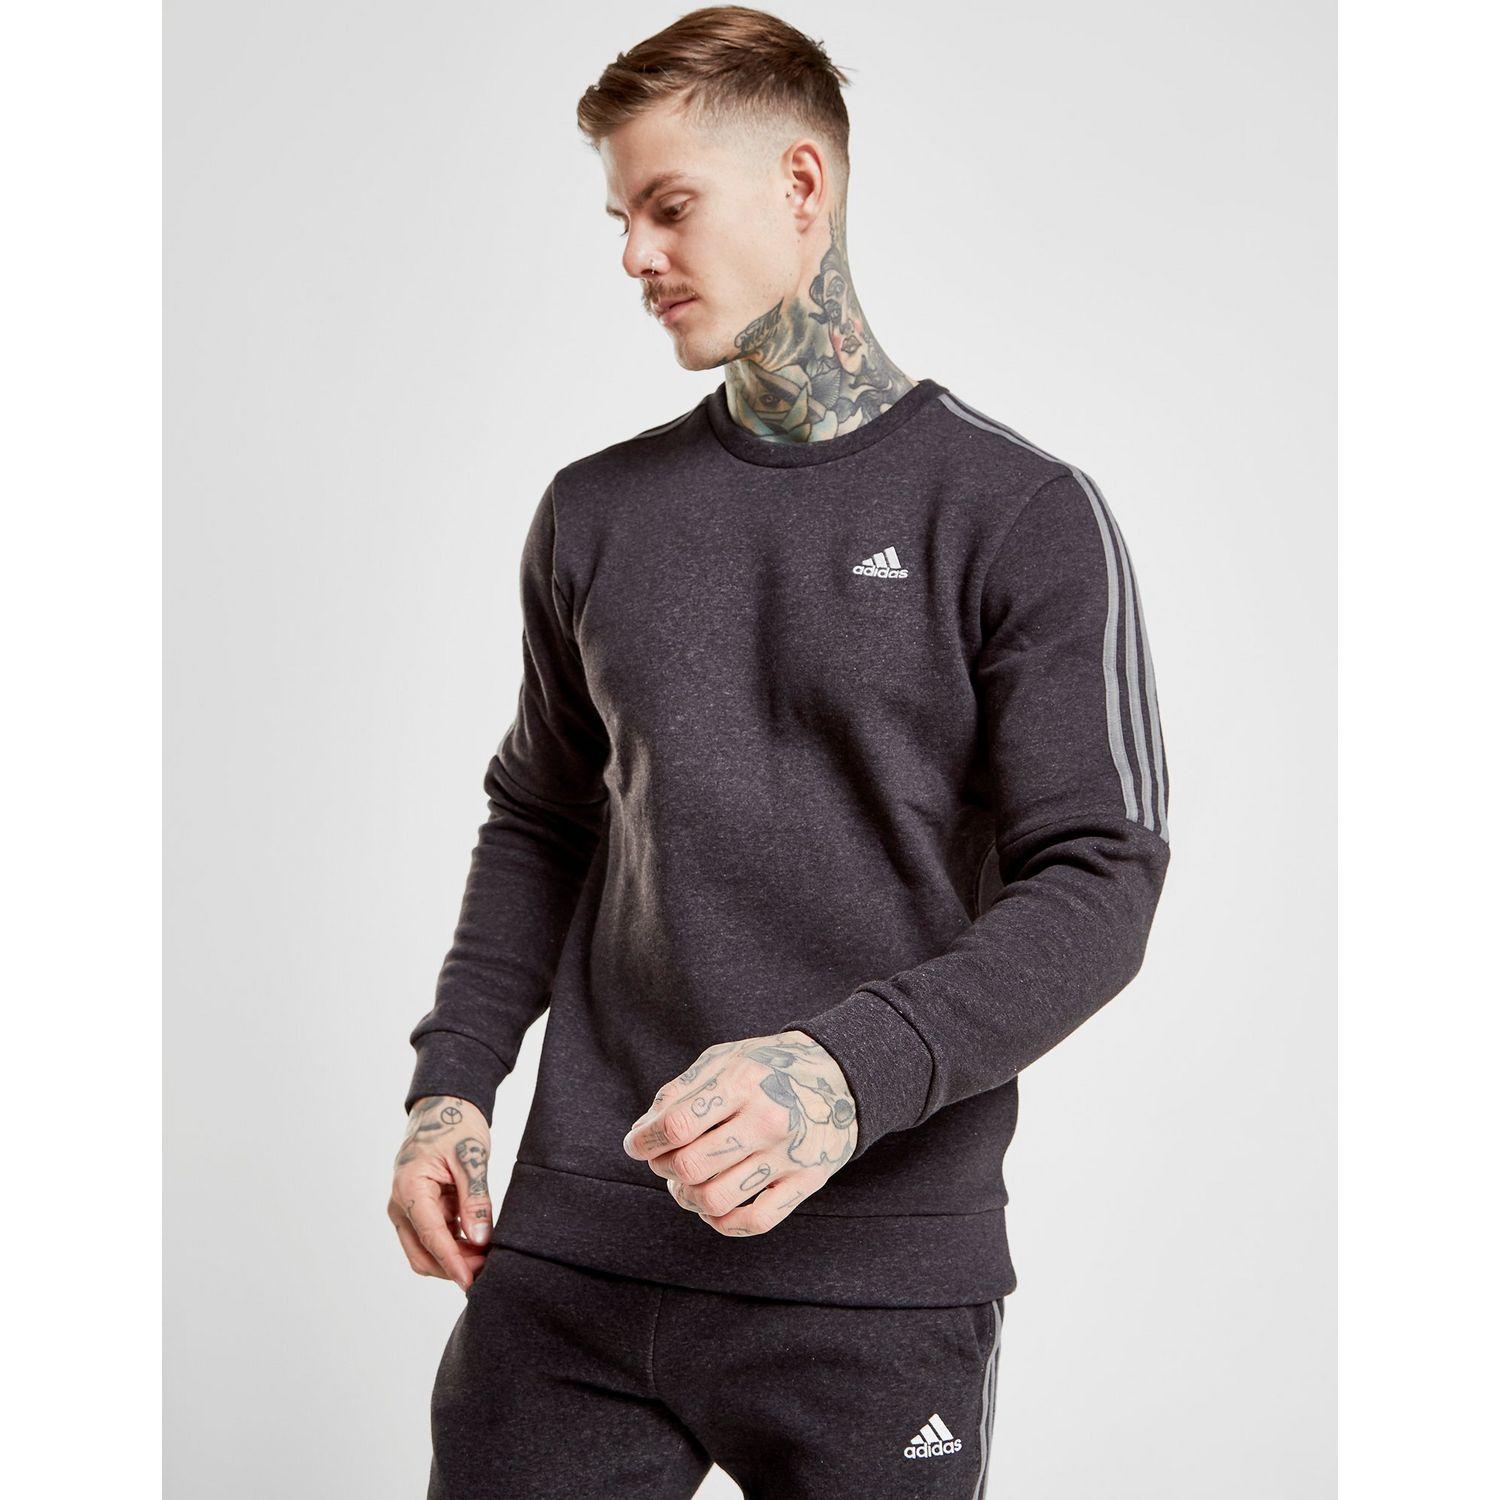 adidas Cotton Essential Crew Sweatshirt in Black/Grey (Gray) for Men - Lyst